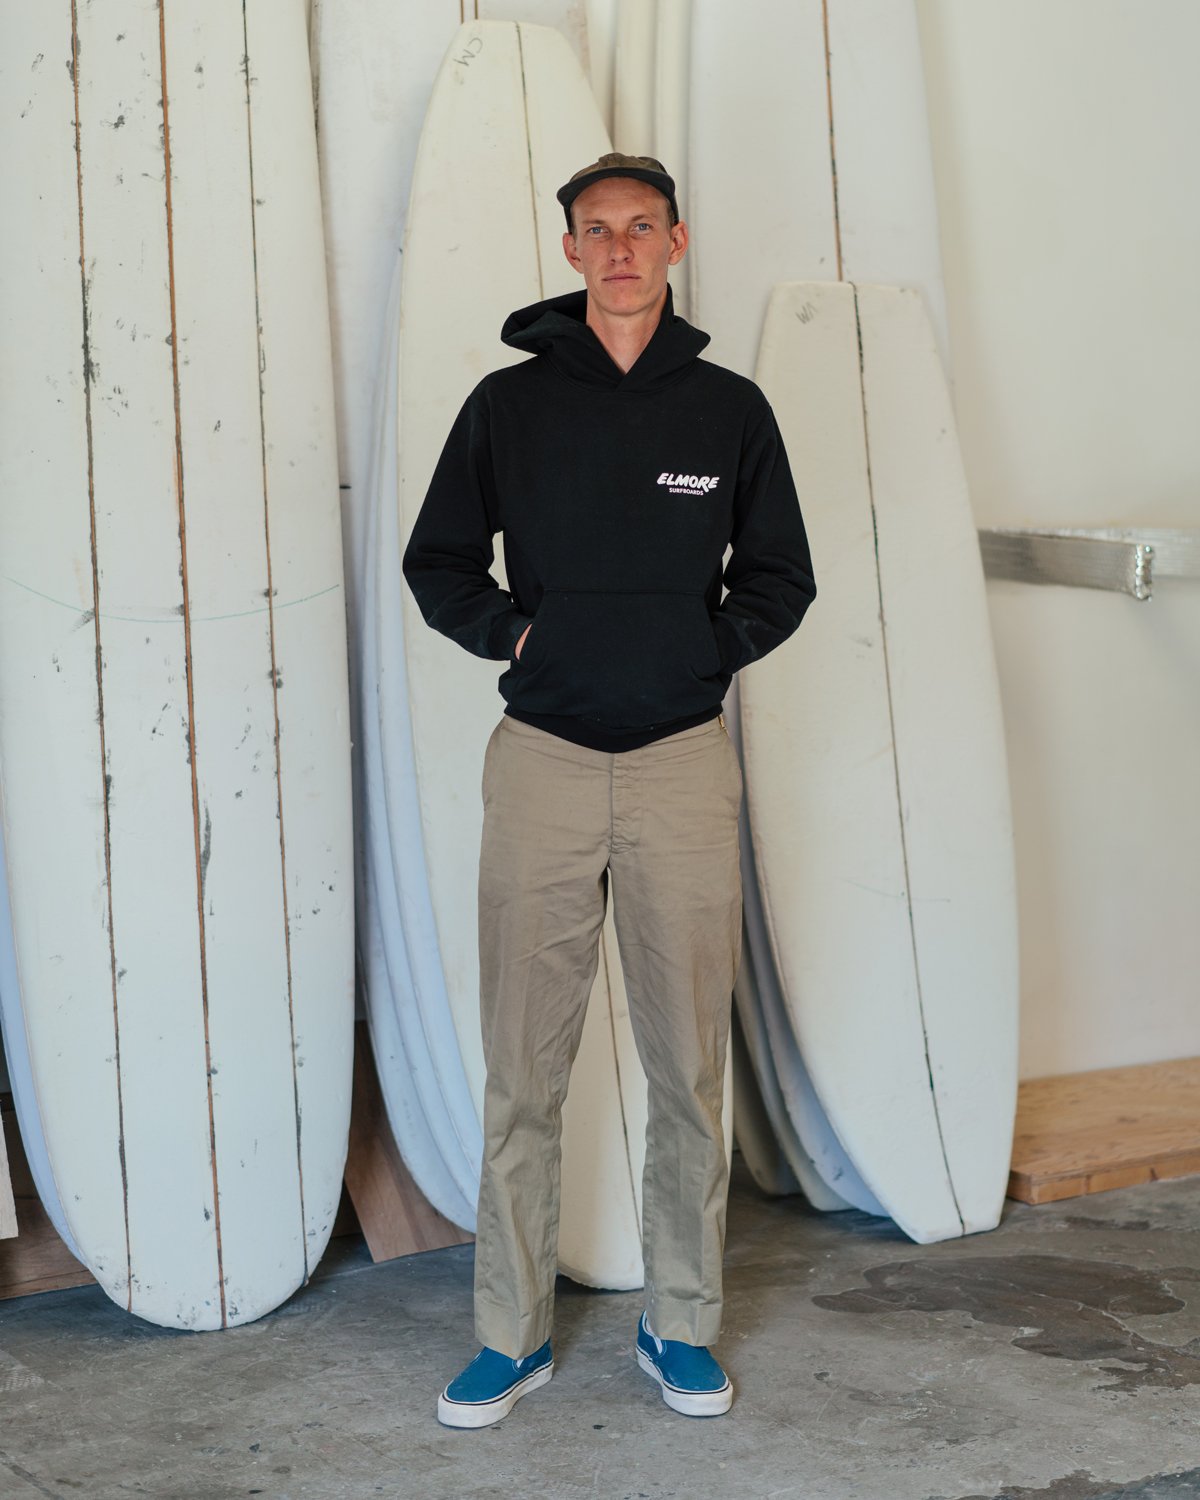 Elmore Surfboards — Goods